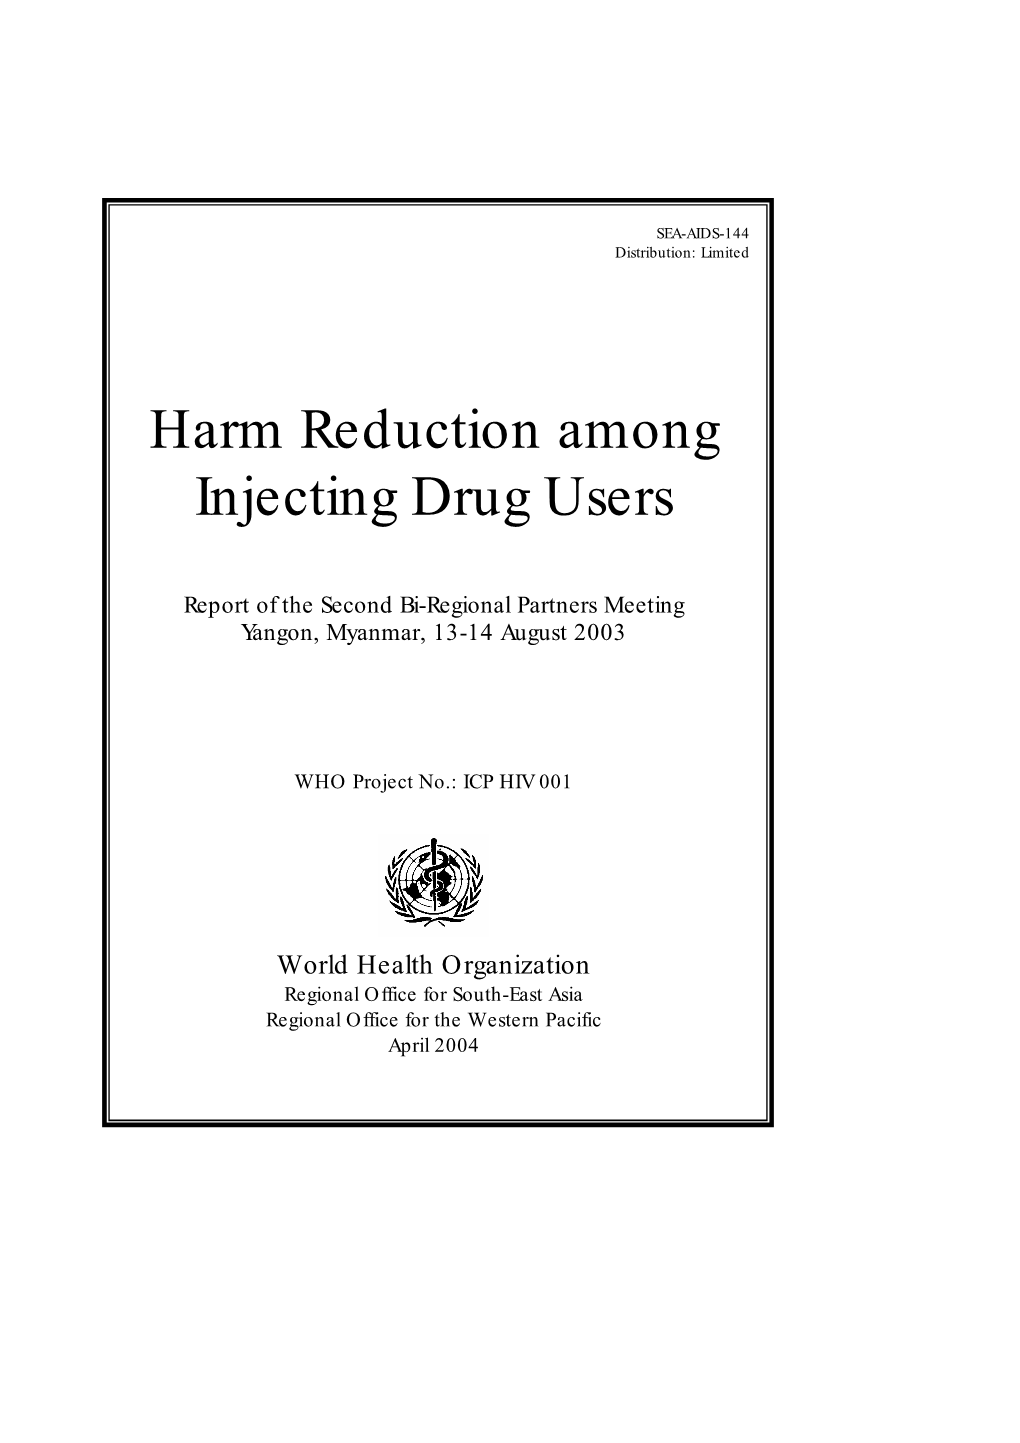 Harm Reduction Among Injecting Drug Users